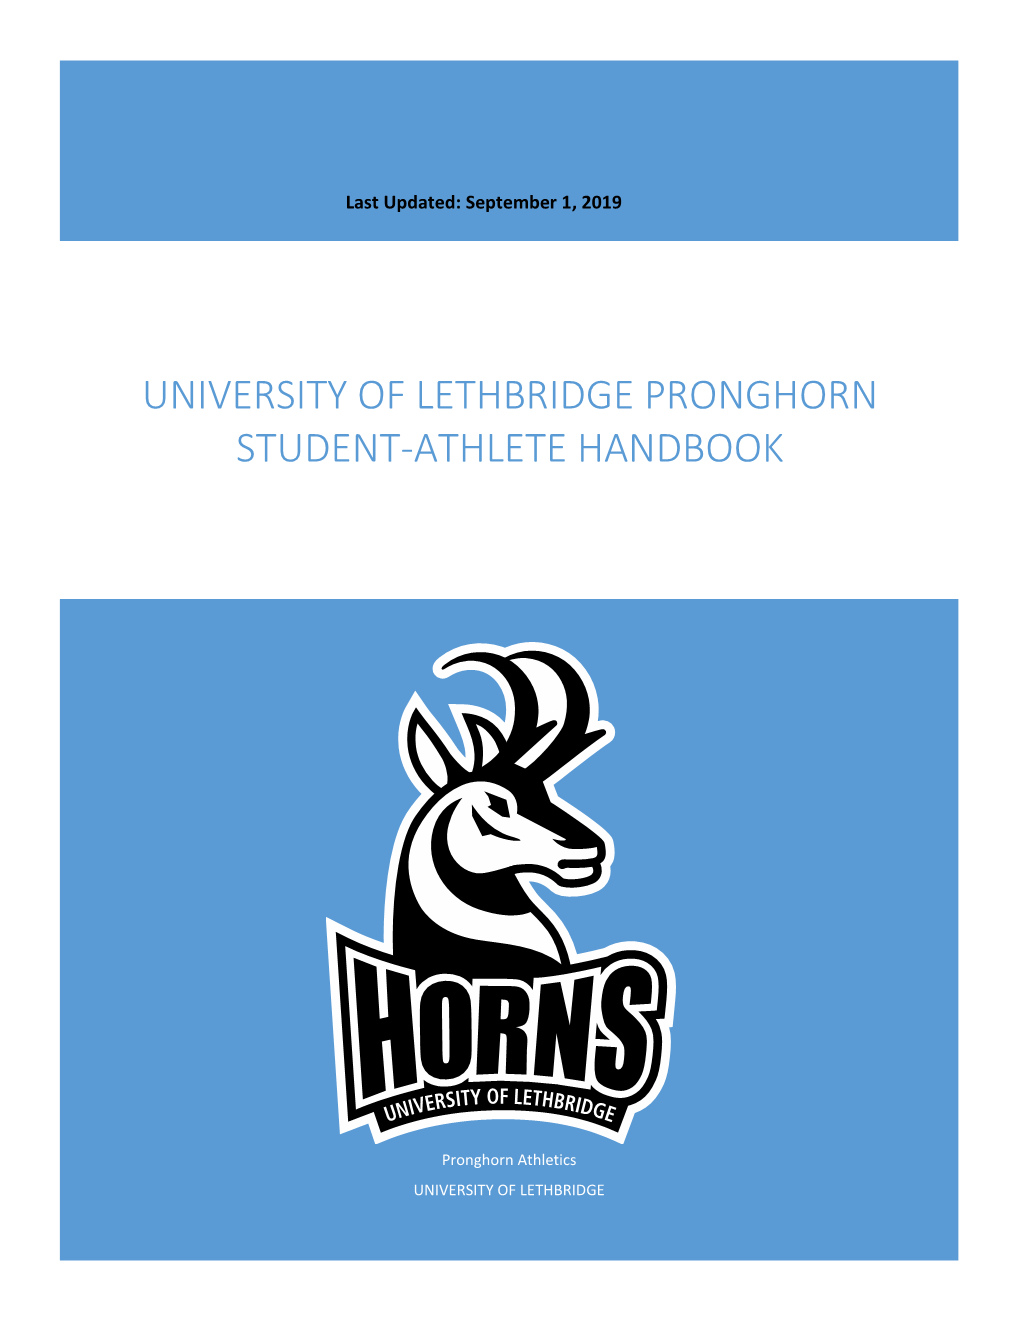 University of Lethbridge Pronghorn Student-Athlete Handbook